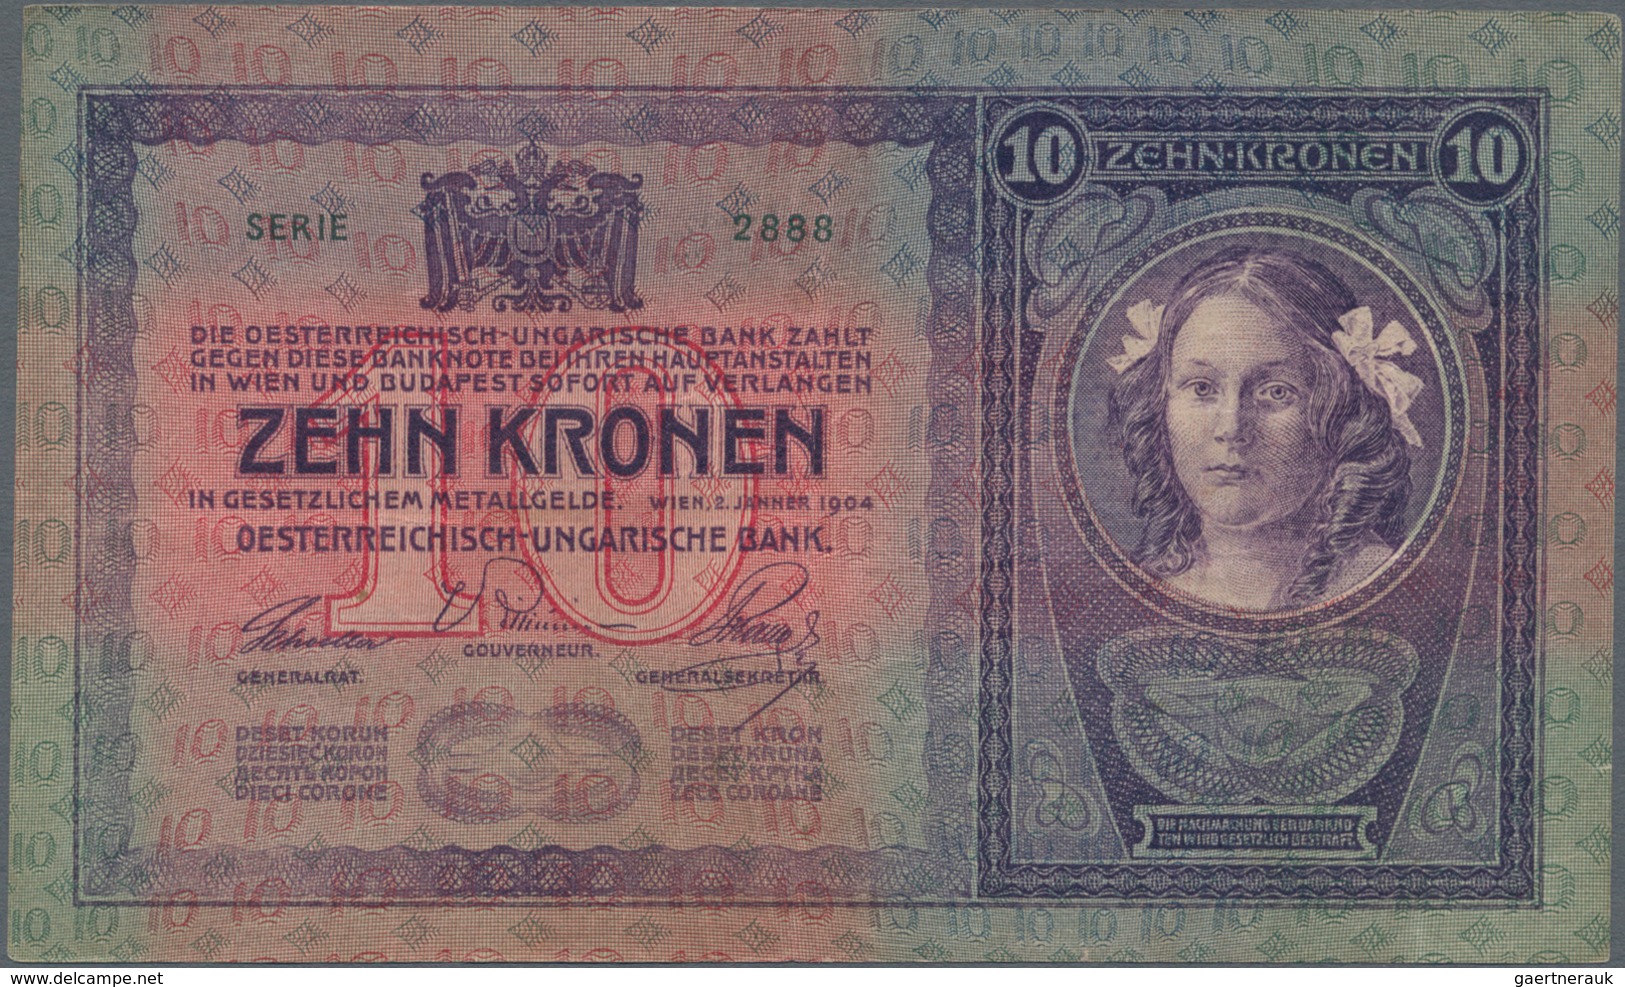 Austria / Österreich: Set with 15 pcs. 10 Kronen 1904, P.9 in about F+ to VF condition. (15 pcs.)